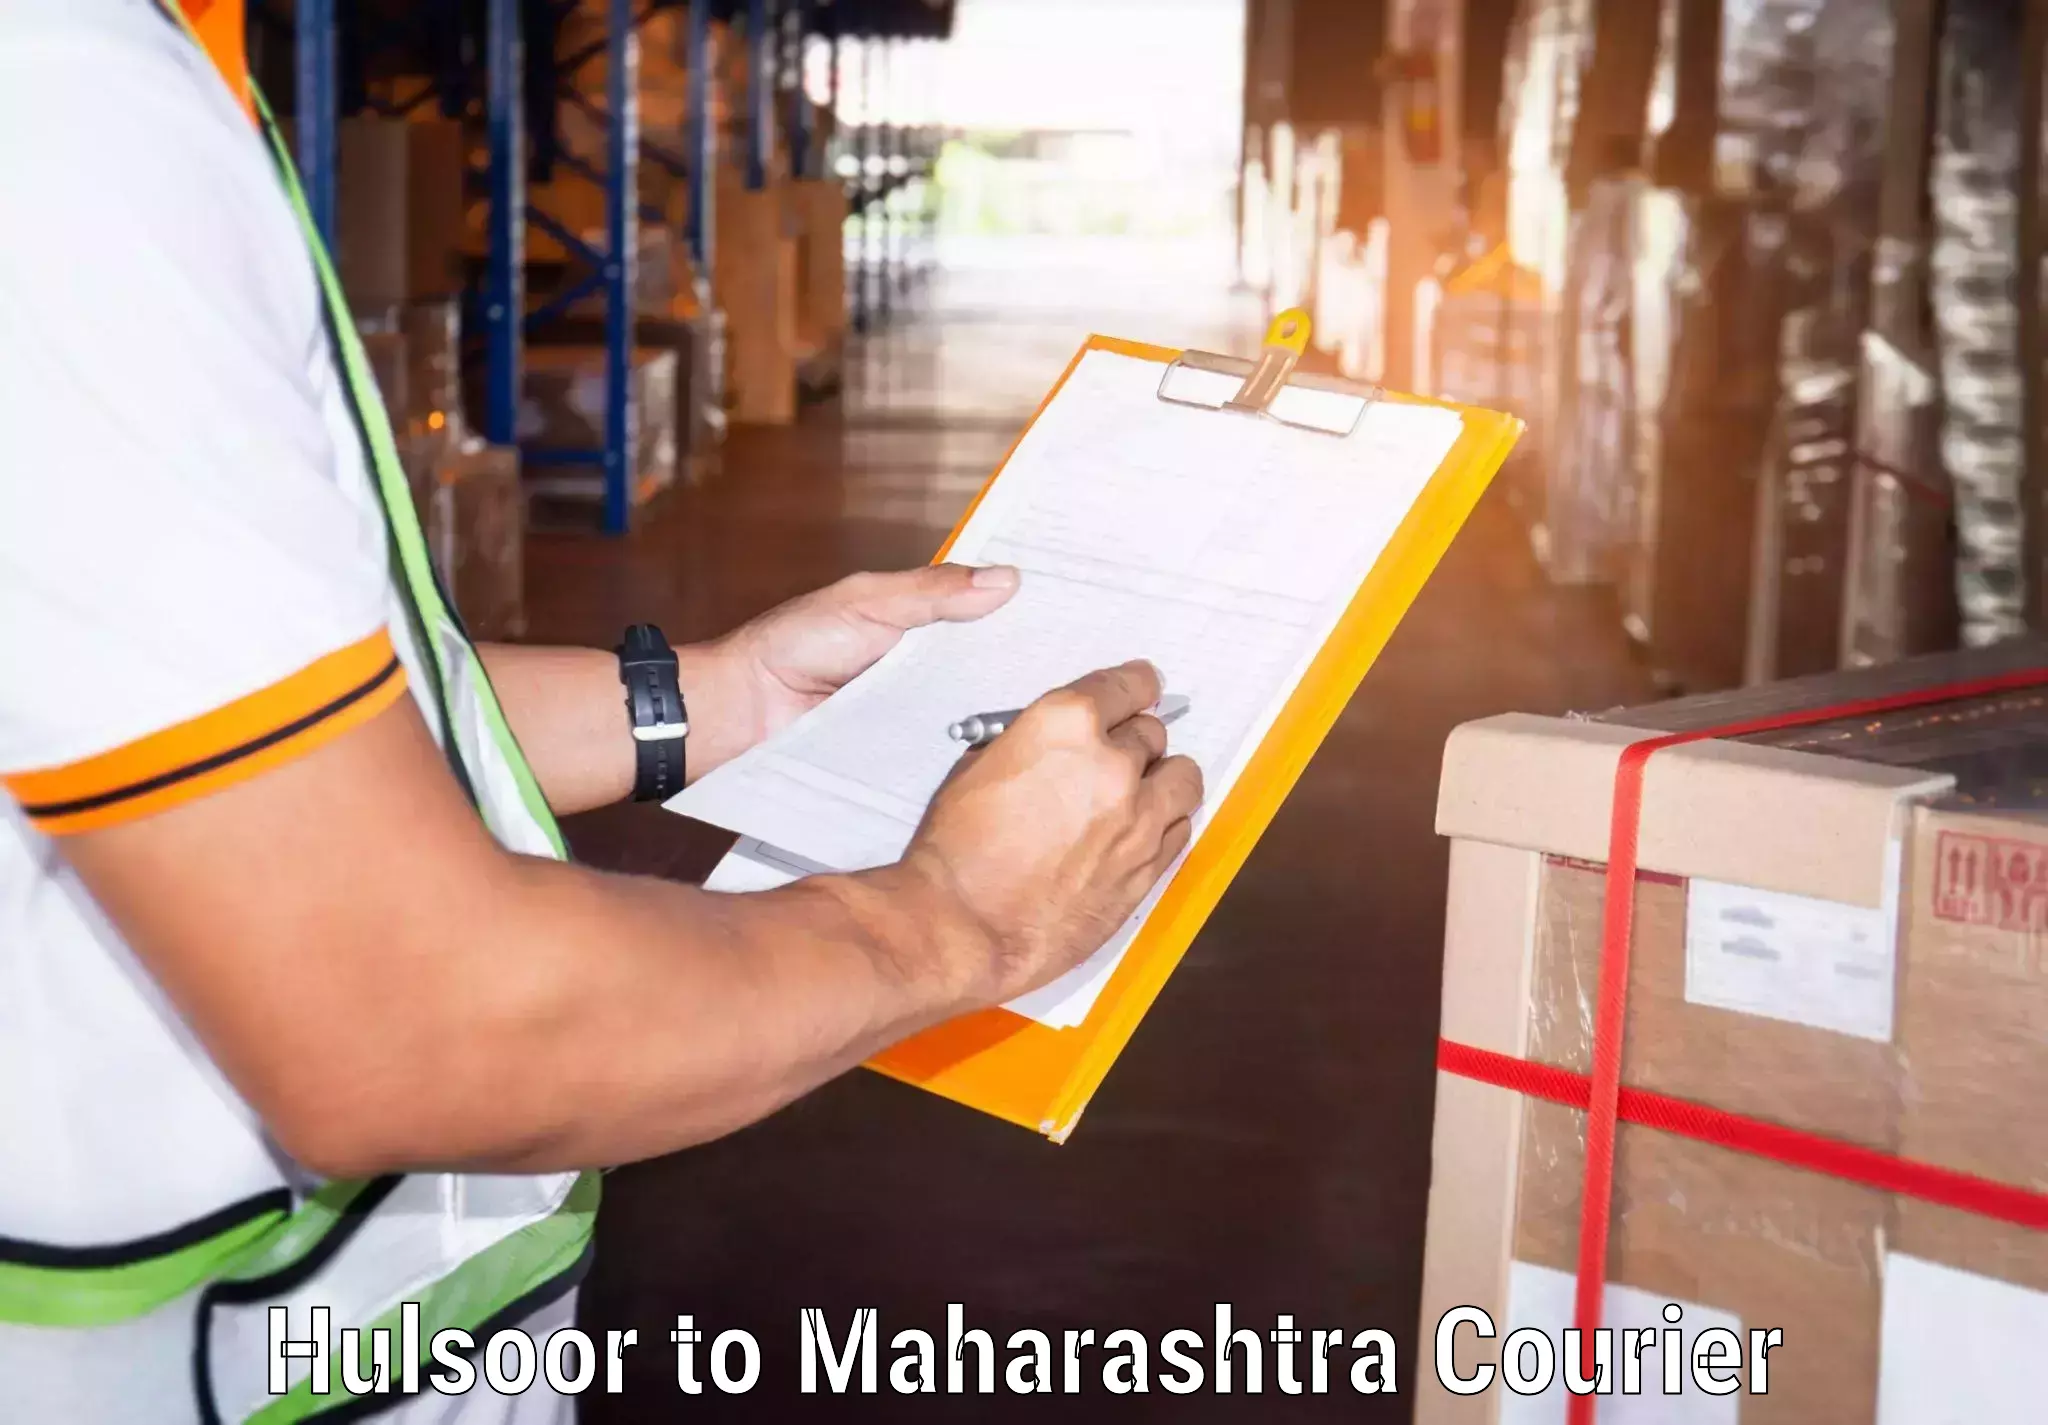 State-of-the-art courier technology Hulsoor to Savitribai Phule Pune University